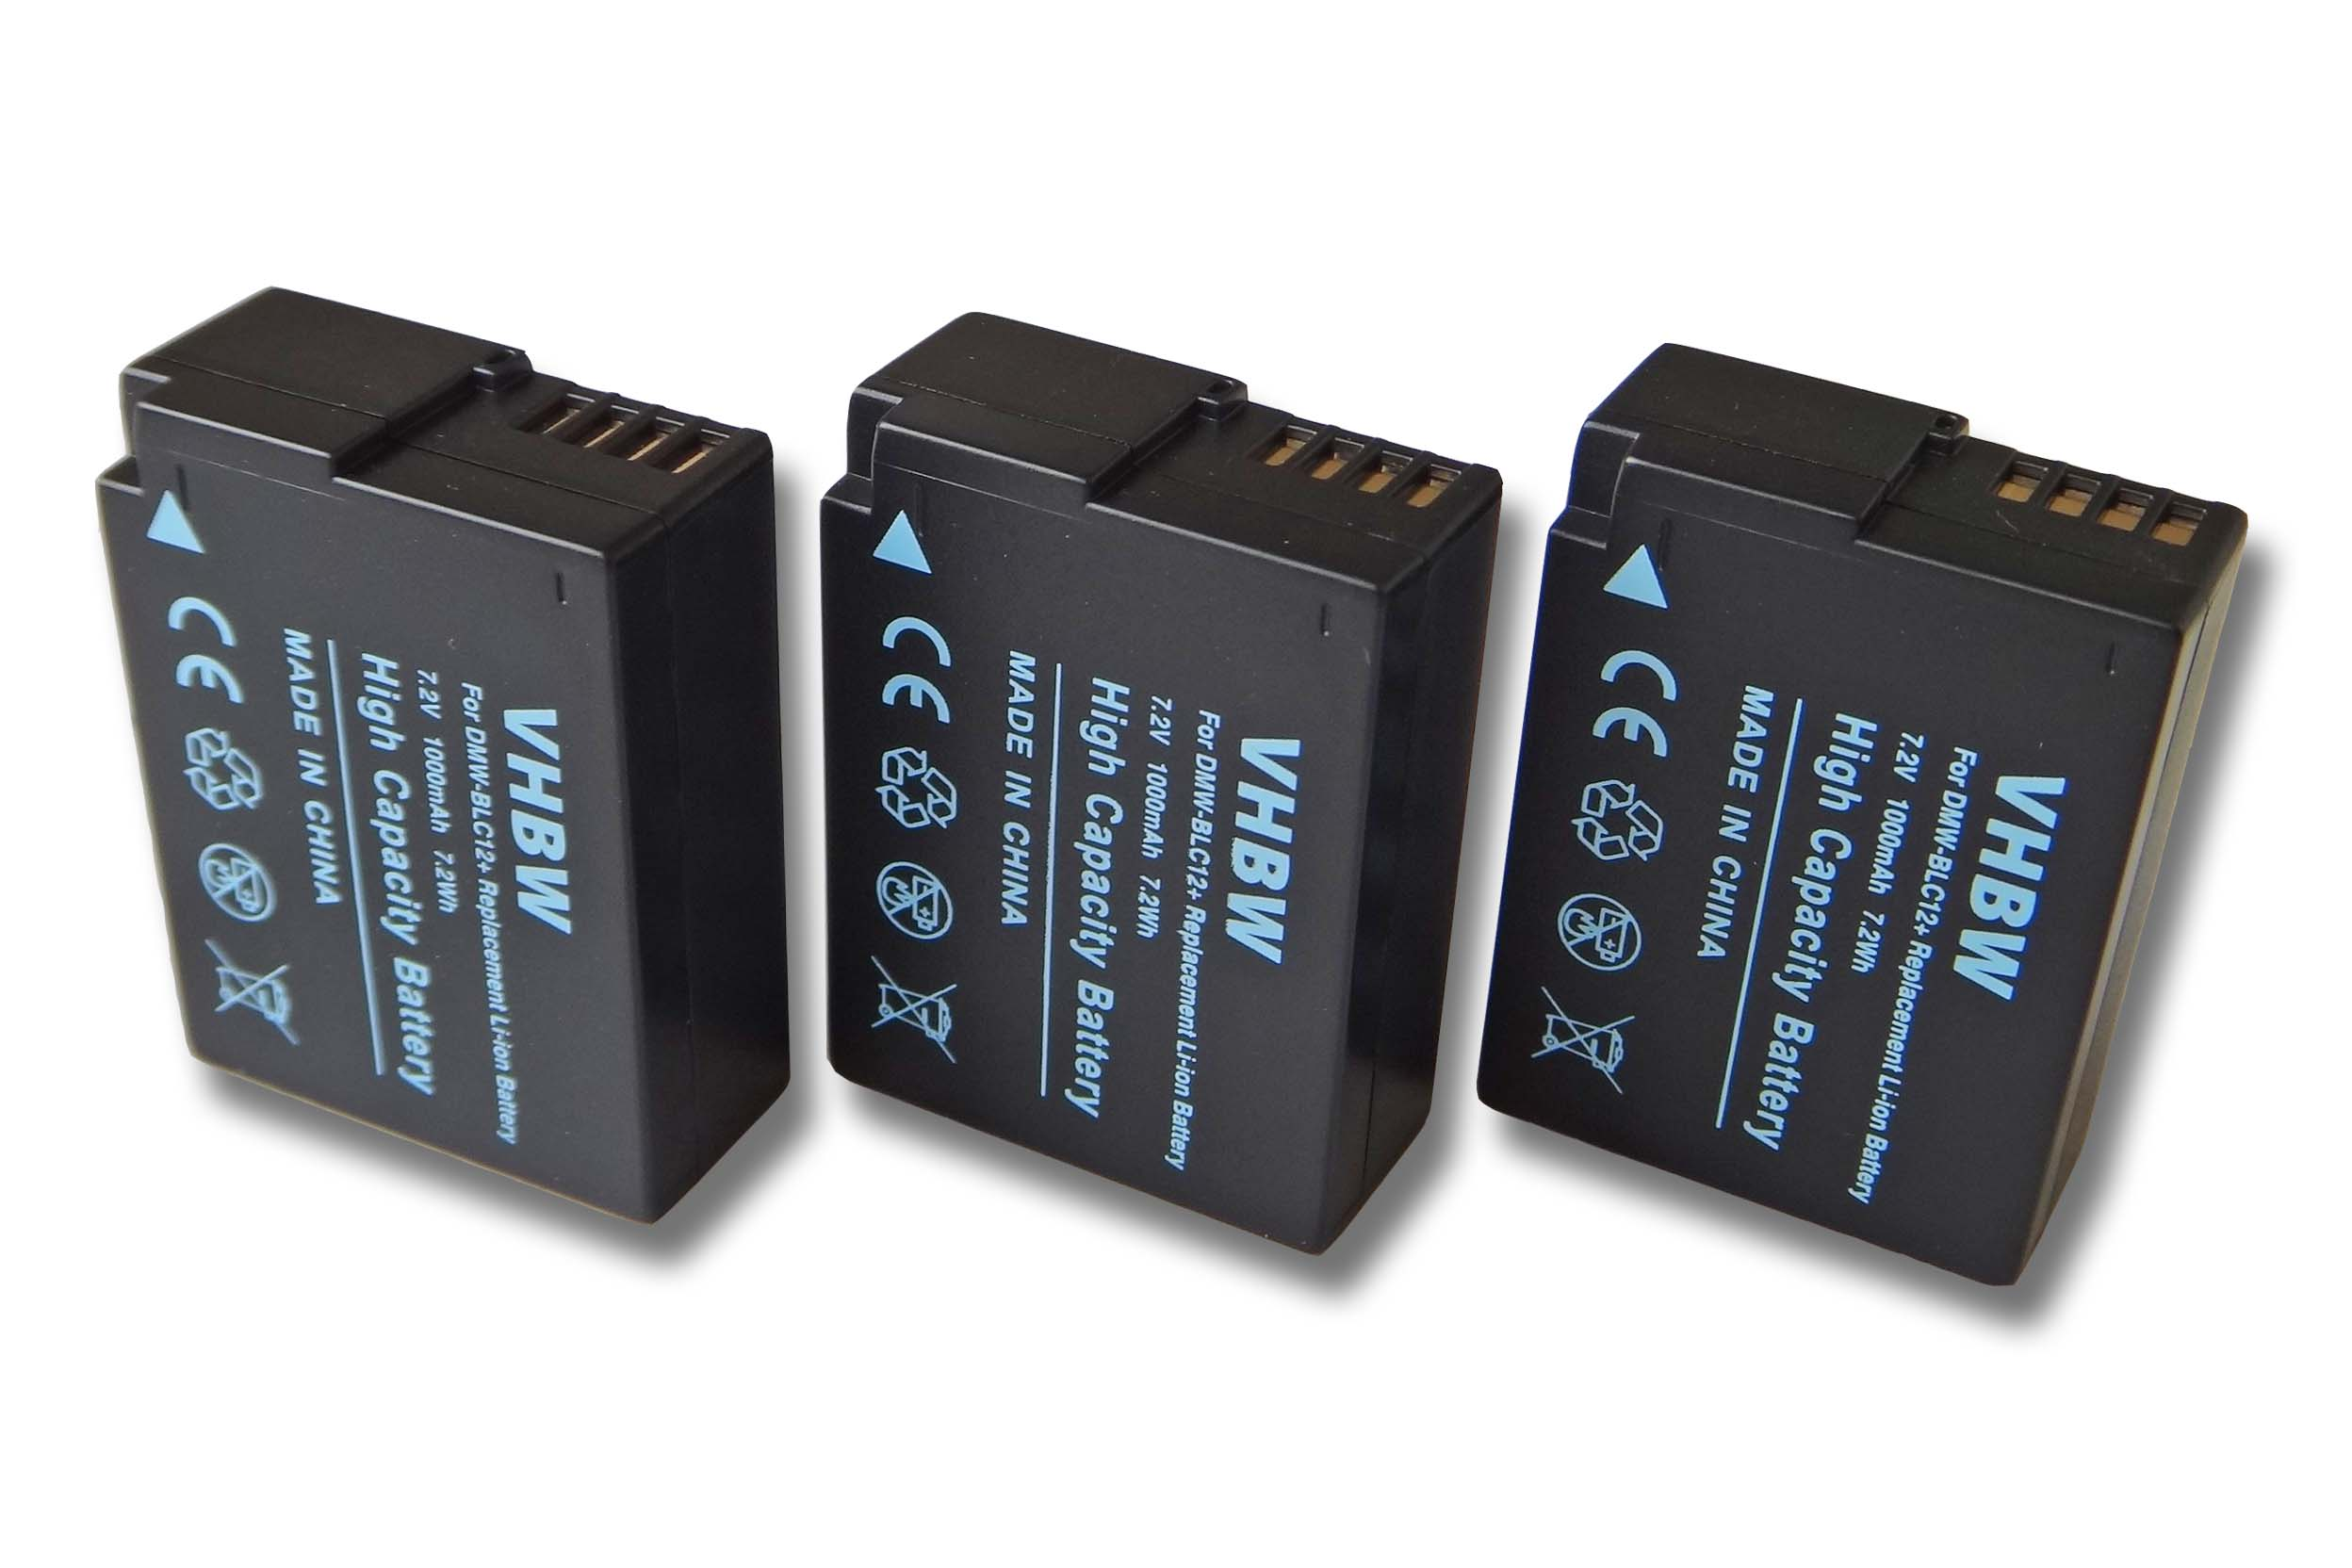 VHBW kompatibel mit Panasonic Lumix Li-Ion DMC-GH2, Kamera, 7.2 DMC-GH2H, 1000 DMC-G80 DMC-G70X, Volt, DMC-G80M, - Akku DMC-GH2K, DMC-G7HK